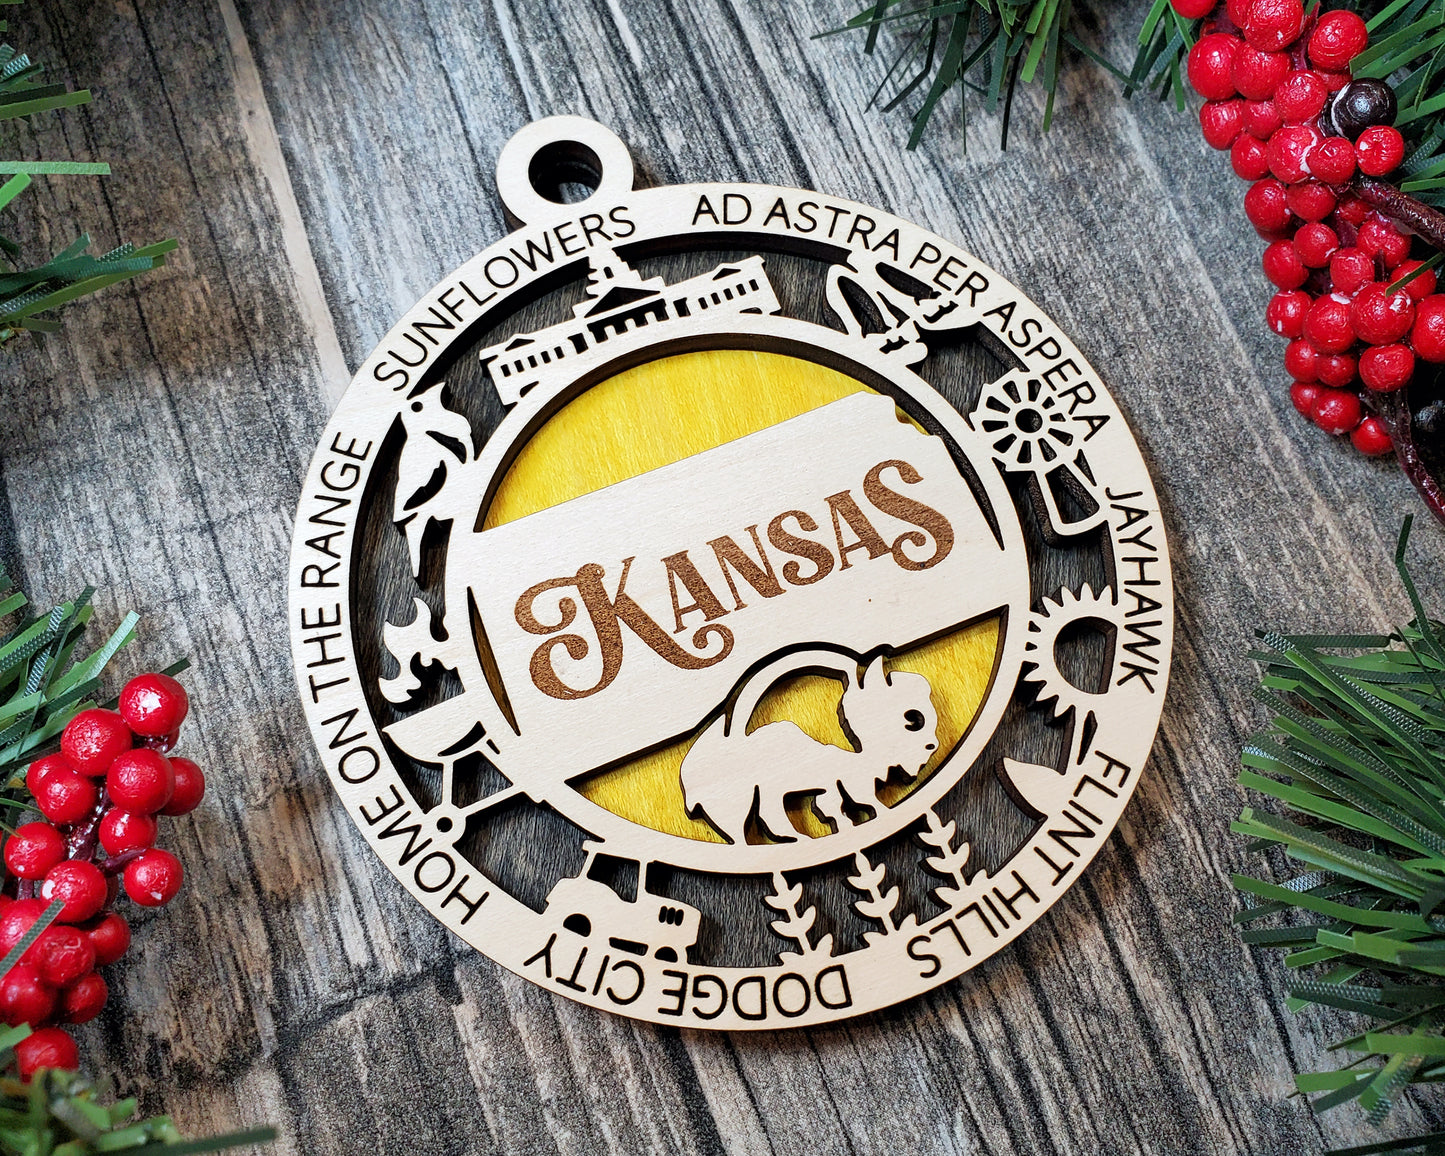 Kansas Ornament